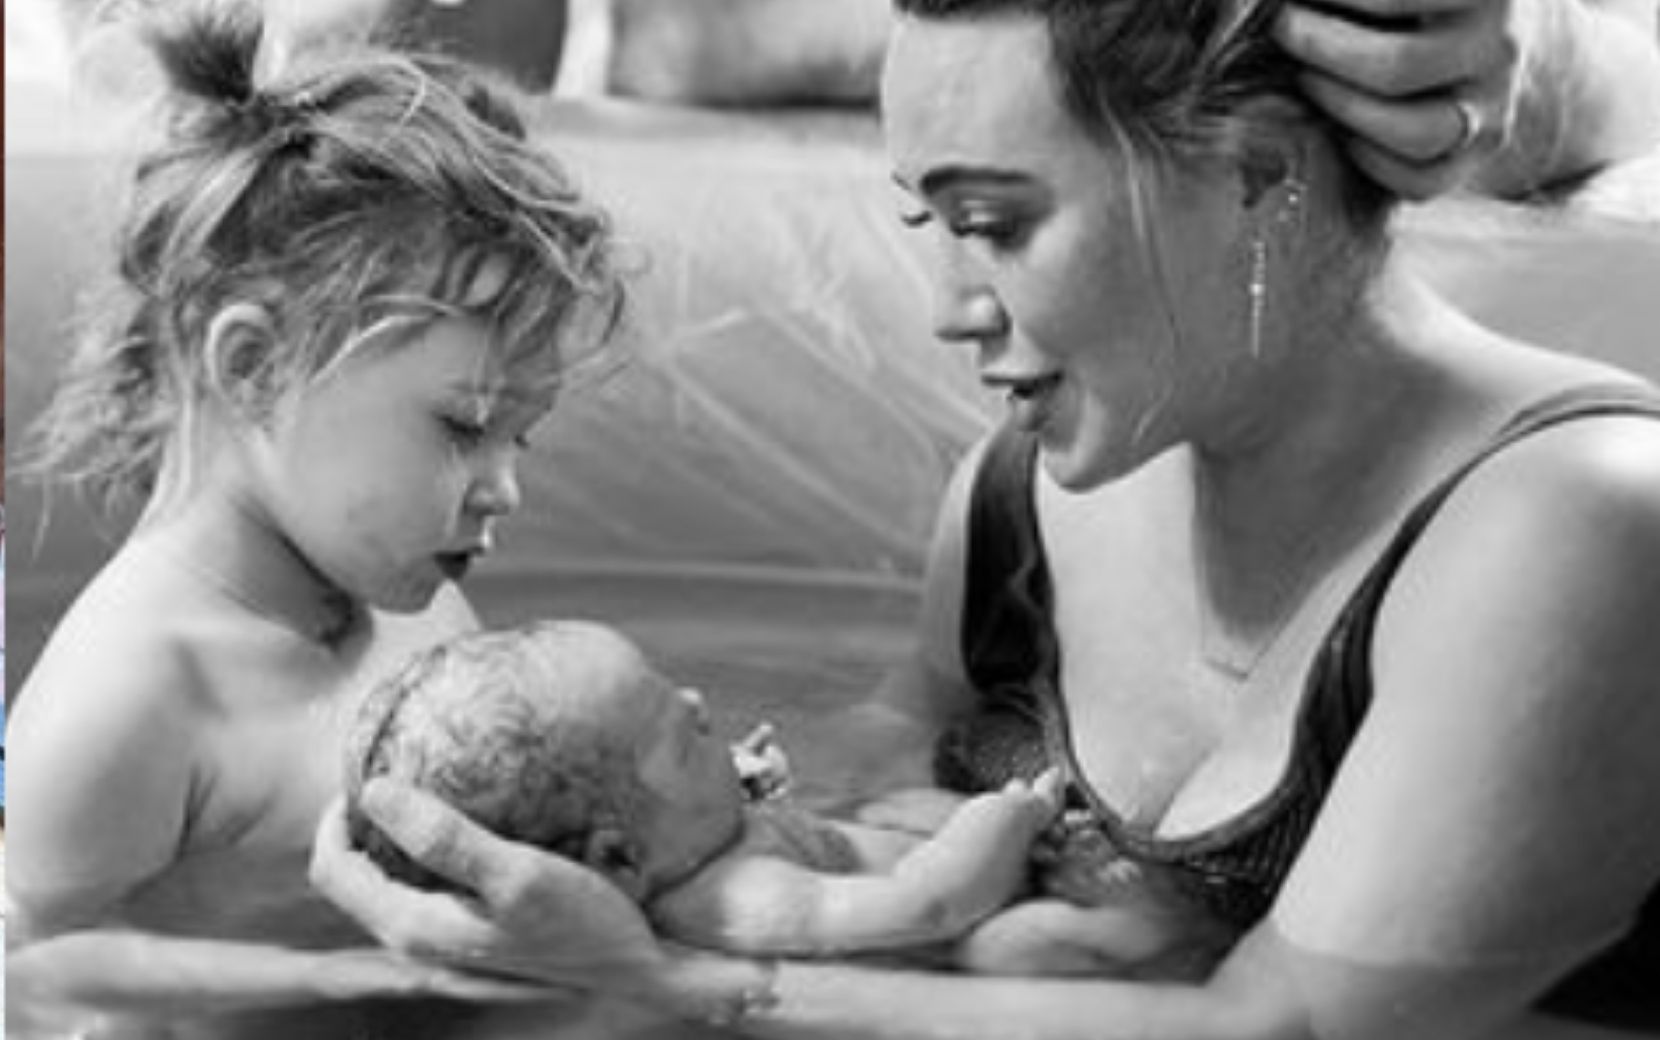 Nasce terceira filha de Hilary Duff: "Te amamos"